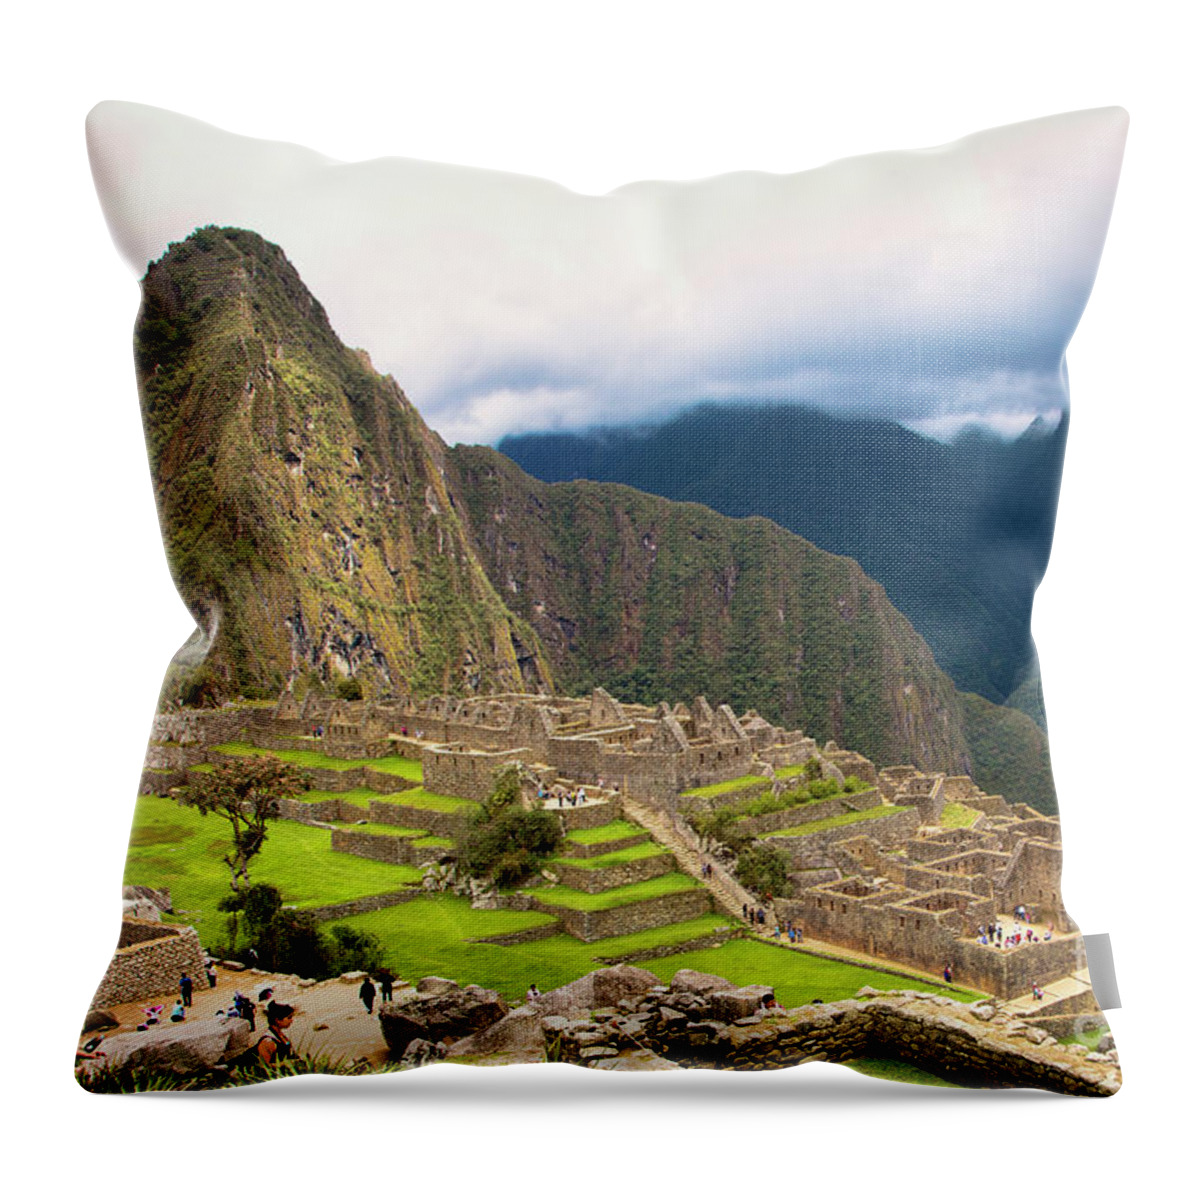 Machu Picchu Throw Pillow featuring the photograph Machu Picchu V by Rene Triay FineArt Photos